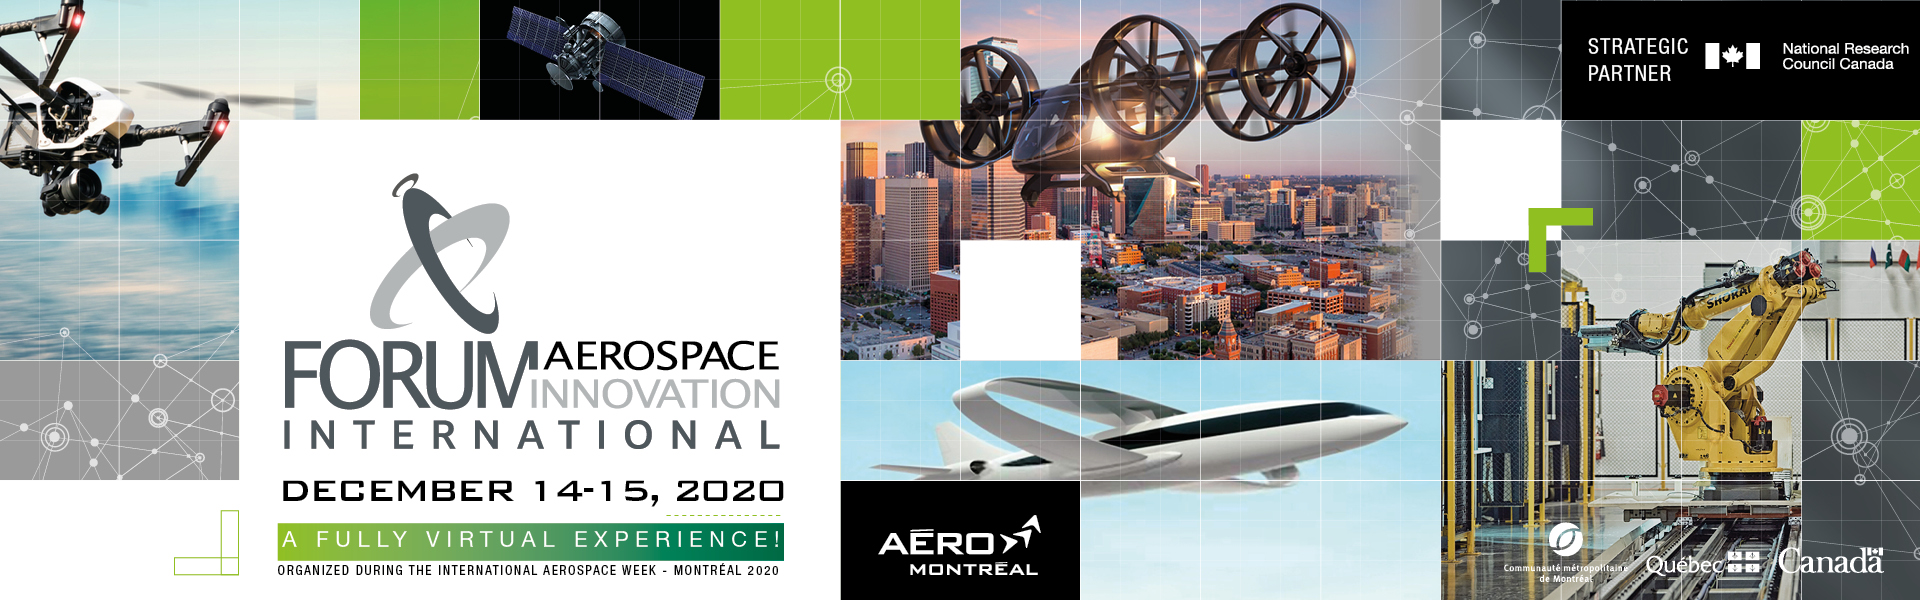 International Aerospace Innovation Forum 2020 (A fully virtual experience)